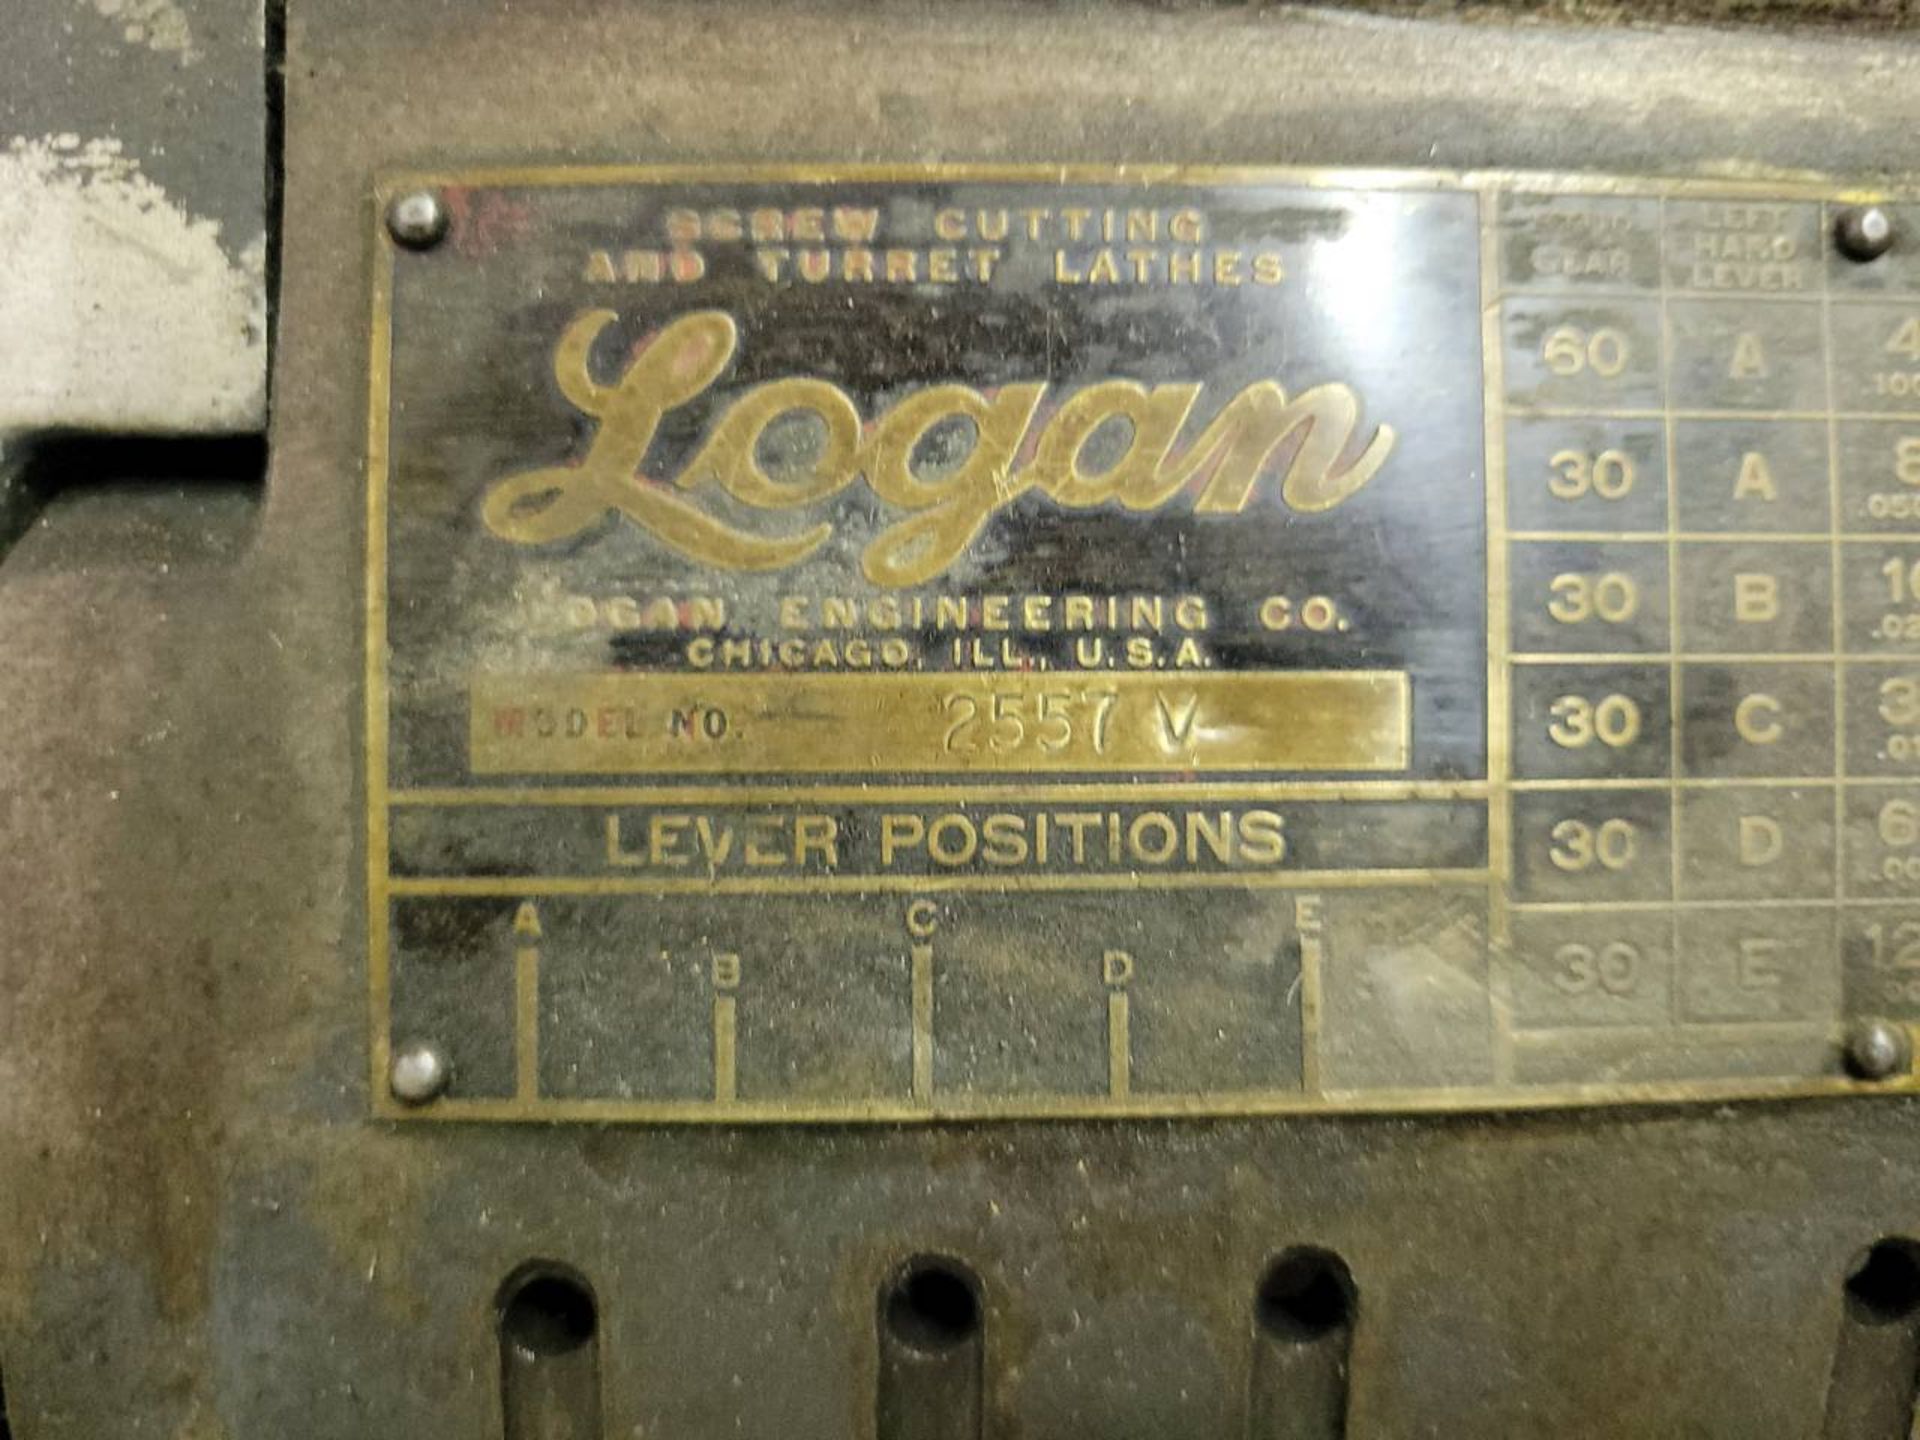 Logan 9" x 32" toolroom lathe, - Image 5 of 9